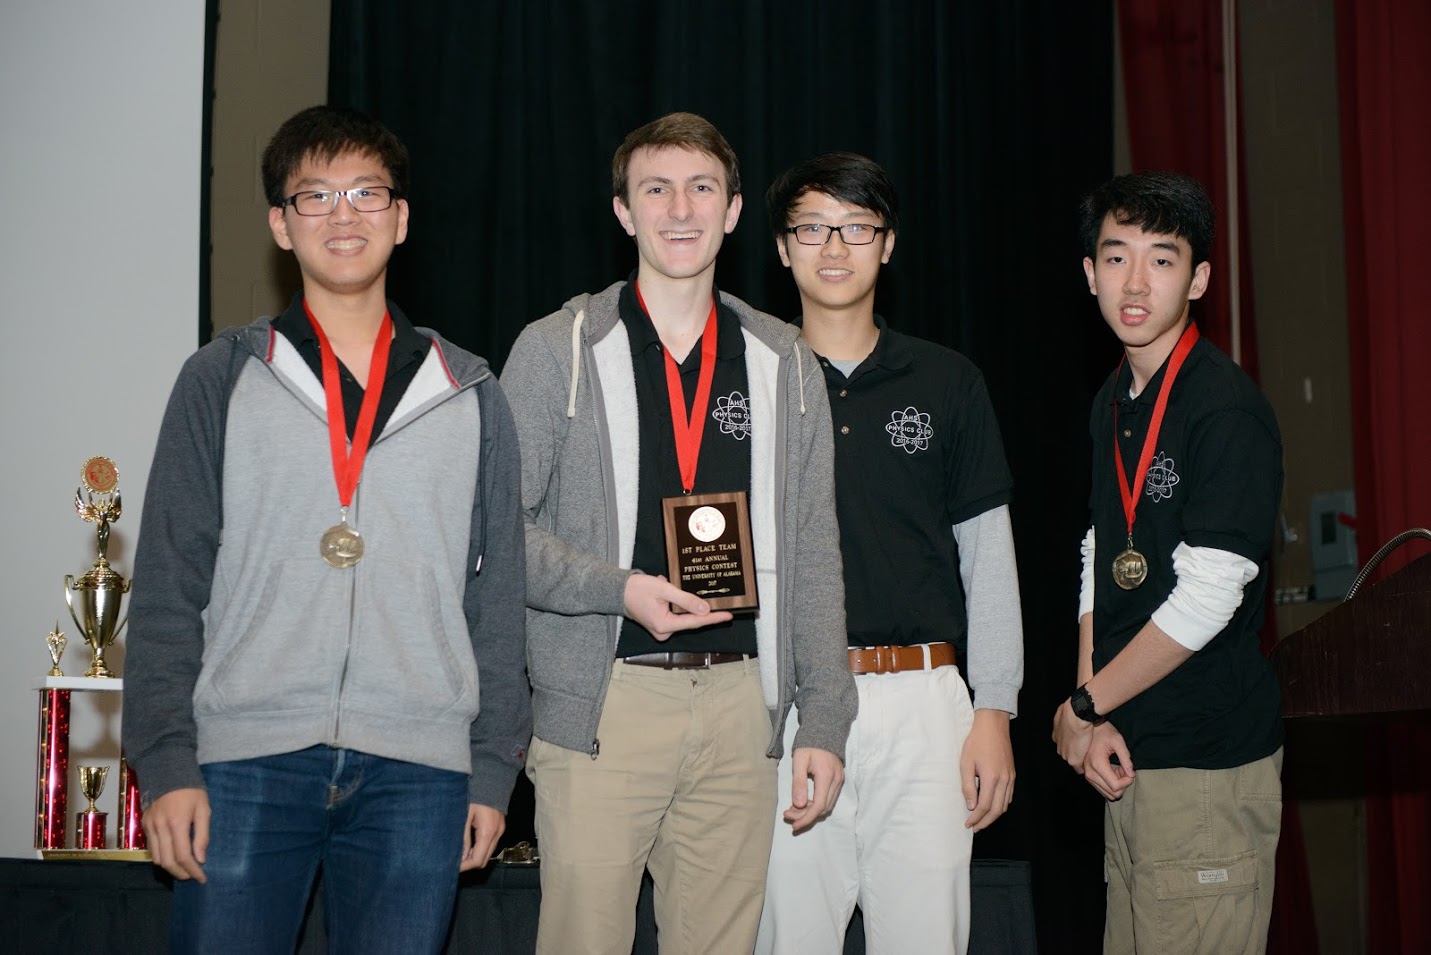 UA Awards Winners of High School Physics Contest